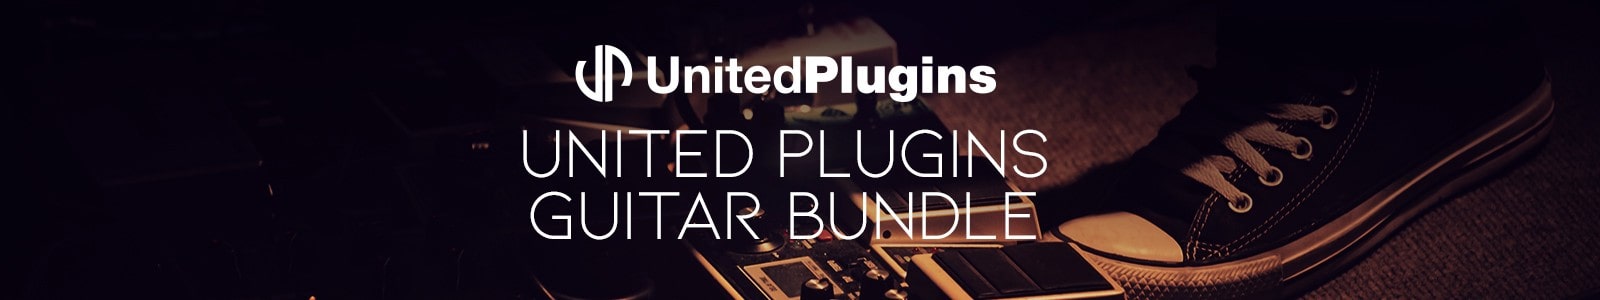 united plugins guitar bundle